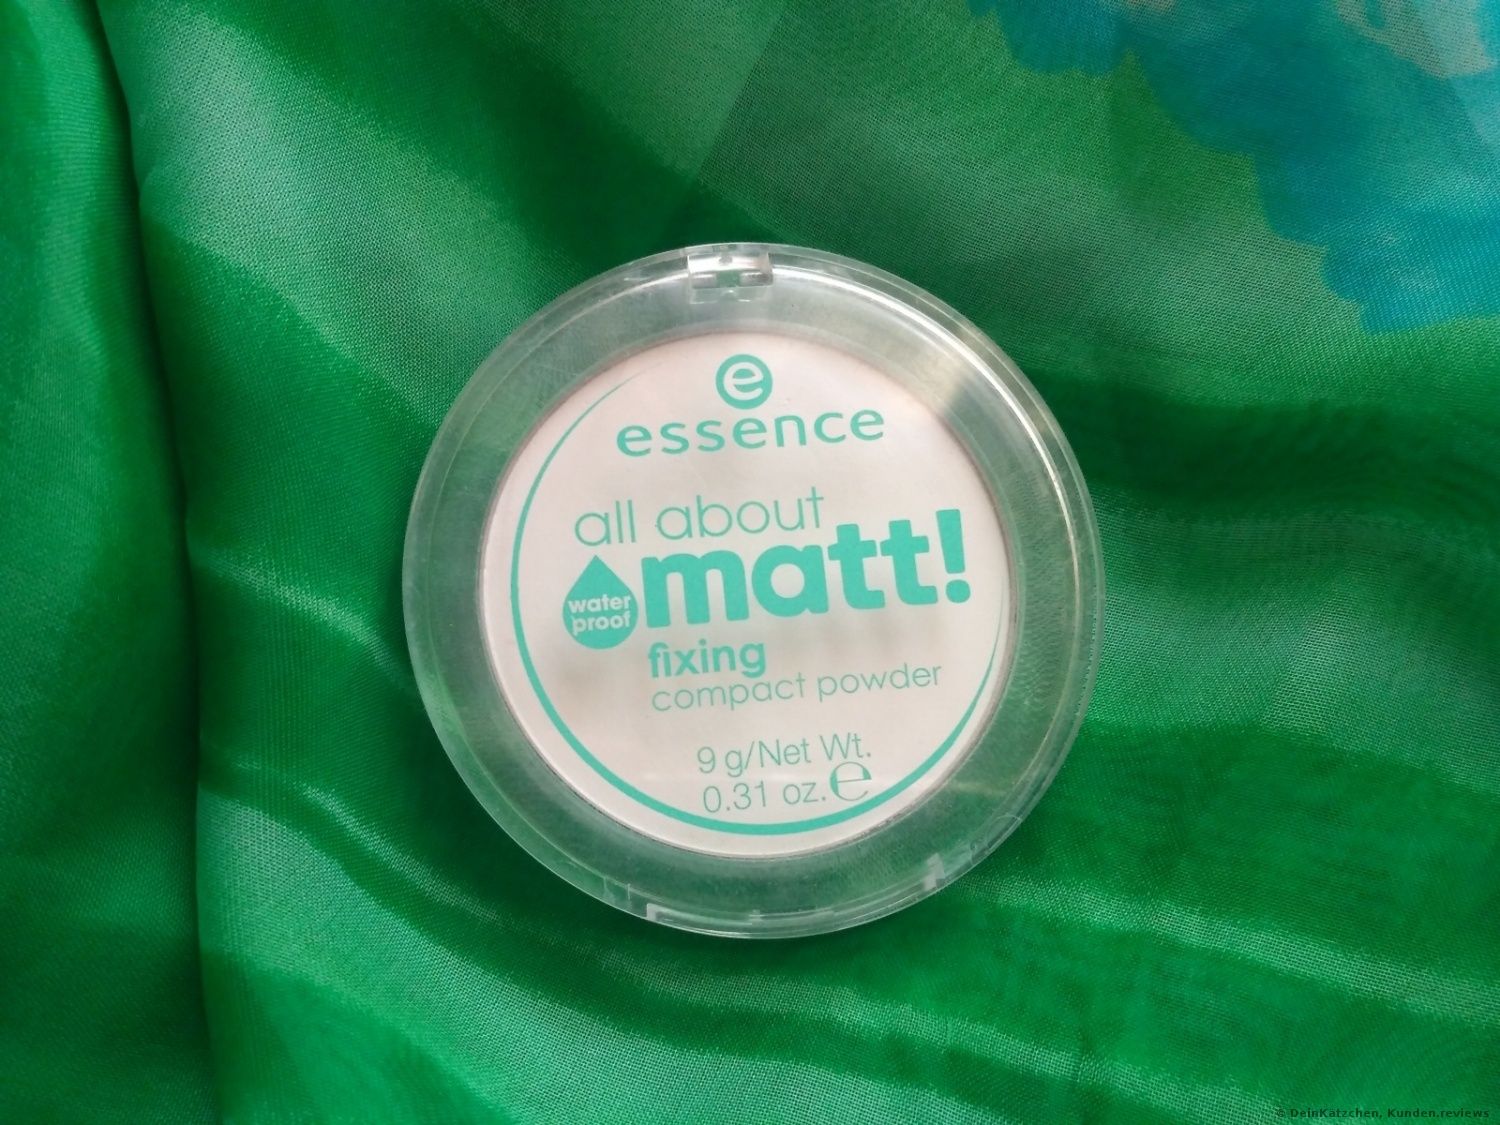 Essence All about matt! fixing compact powder waterproof